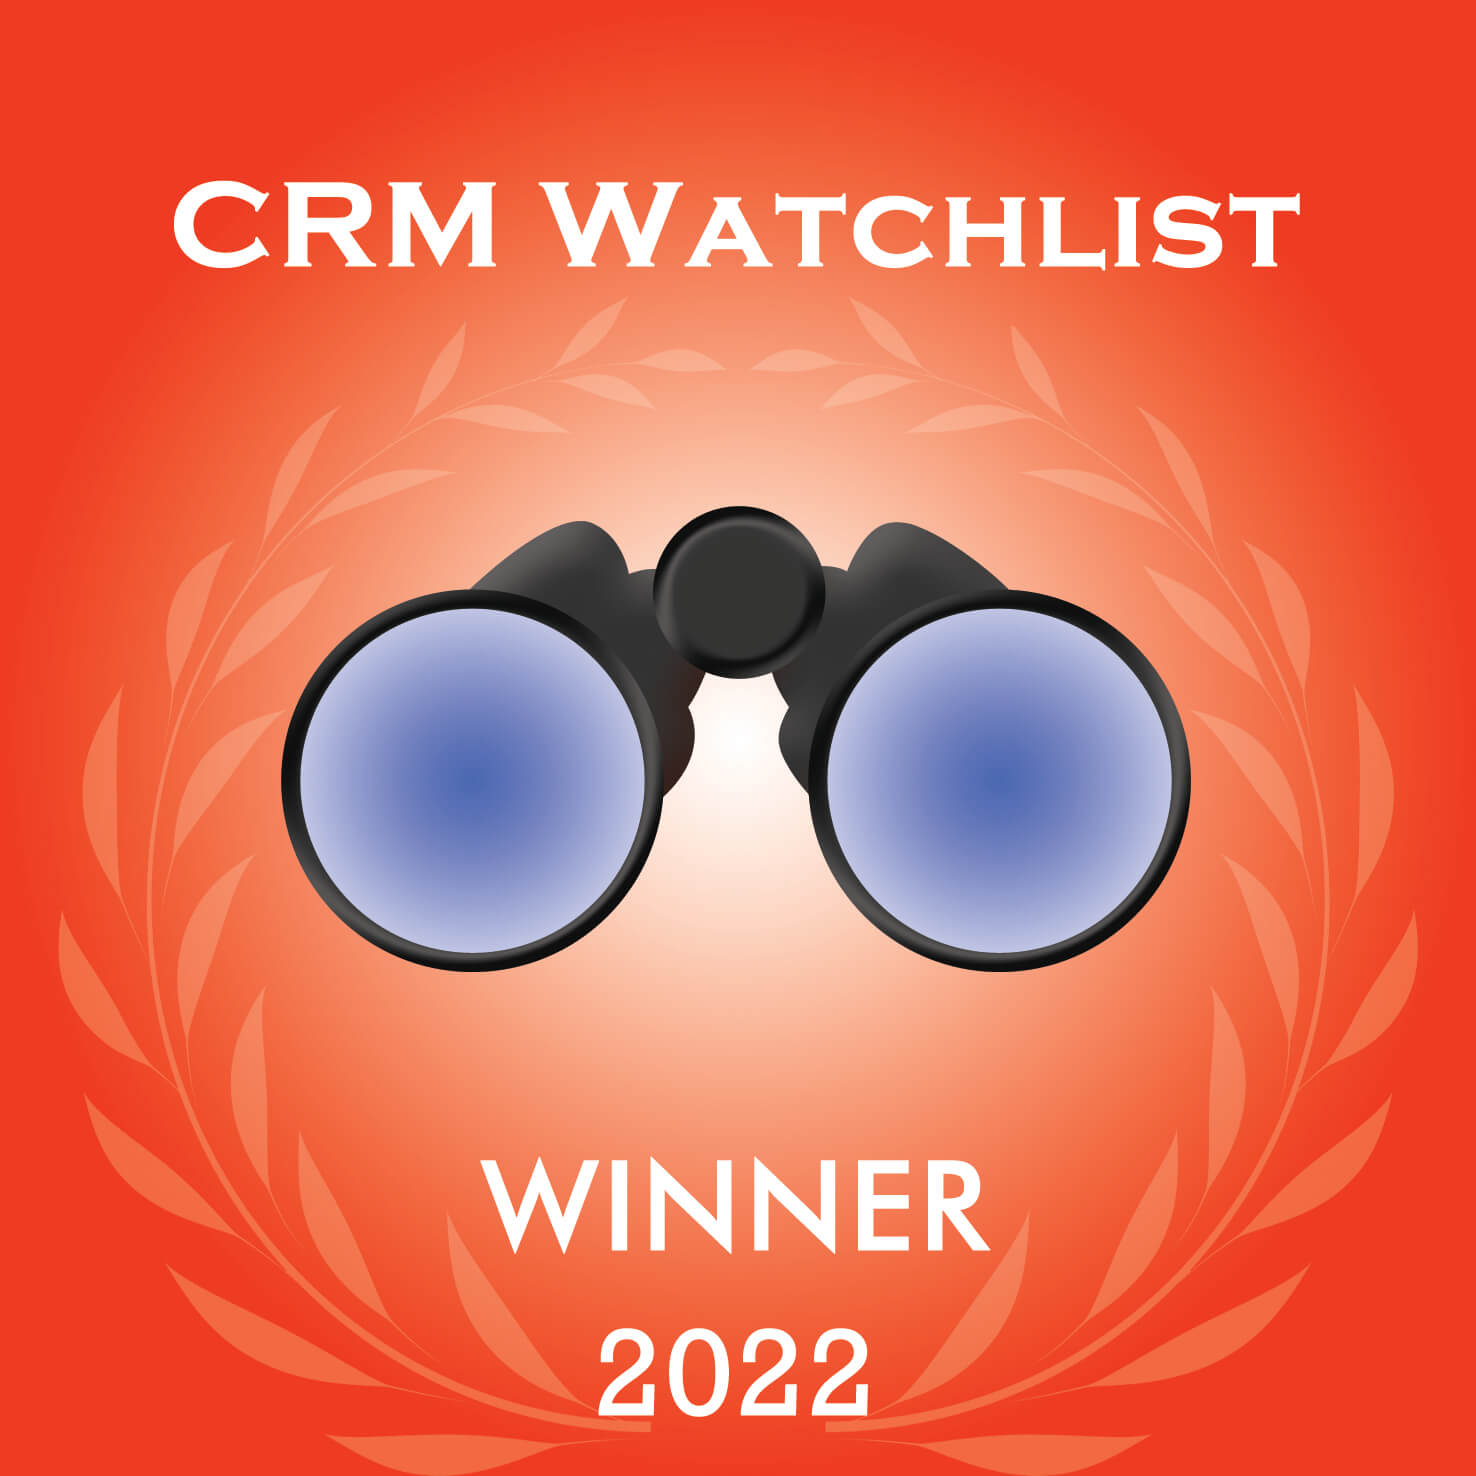 CRM Watchlist Winner 2022 award badge